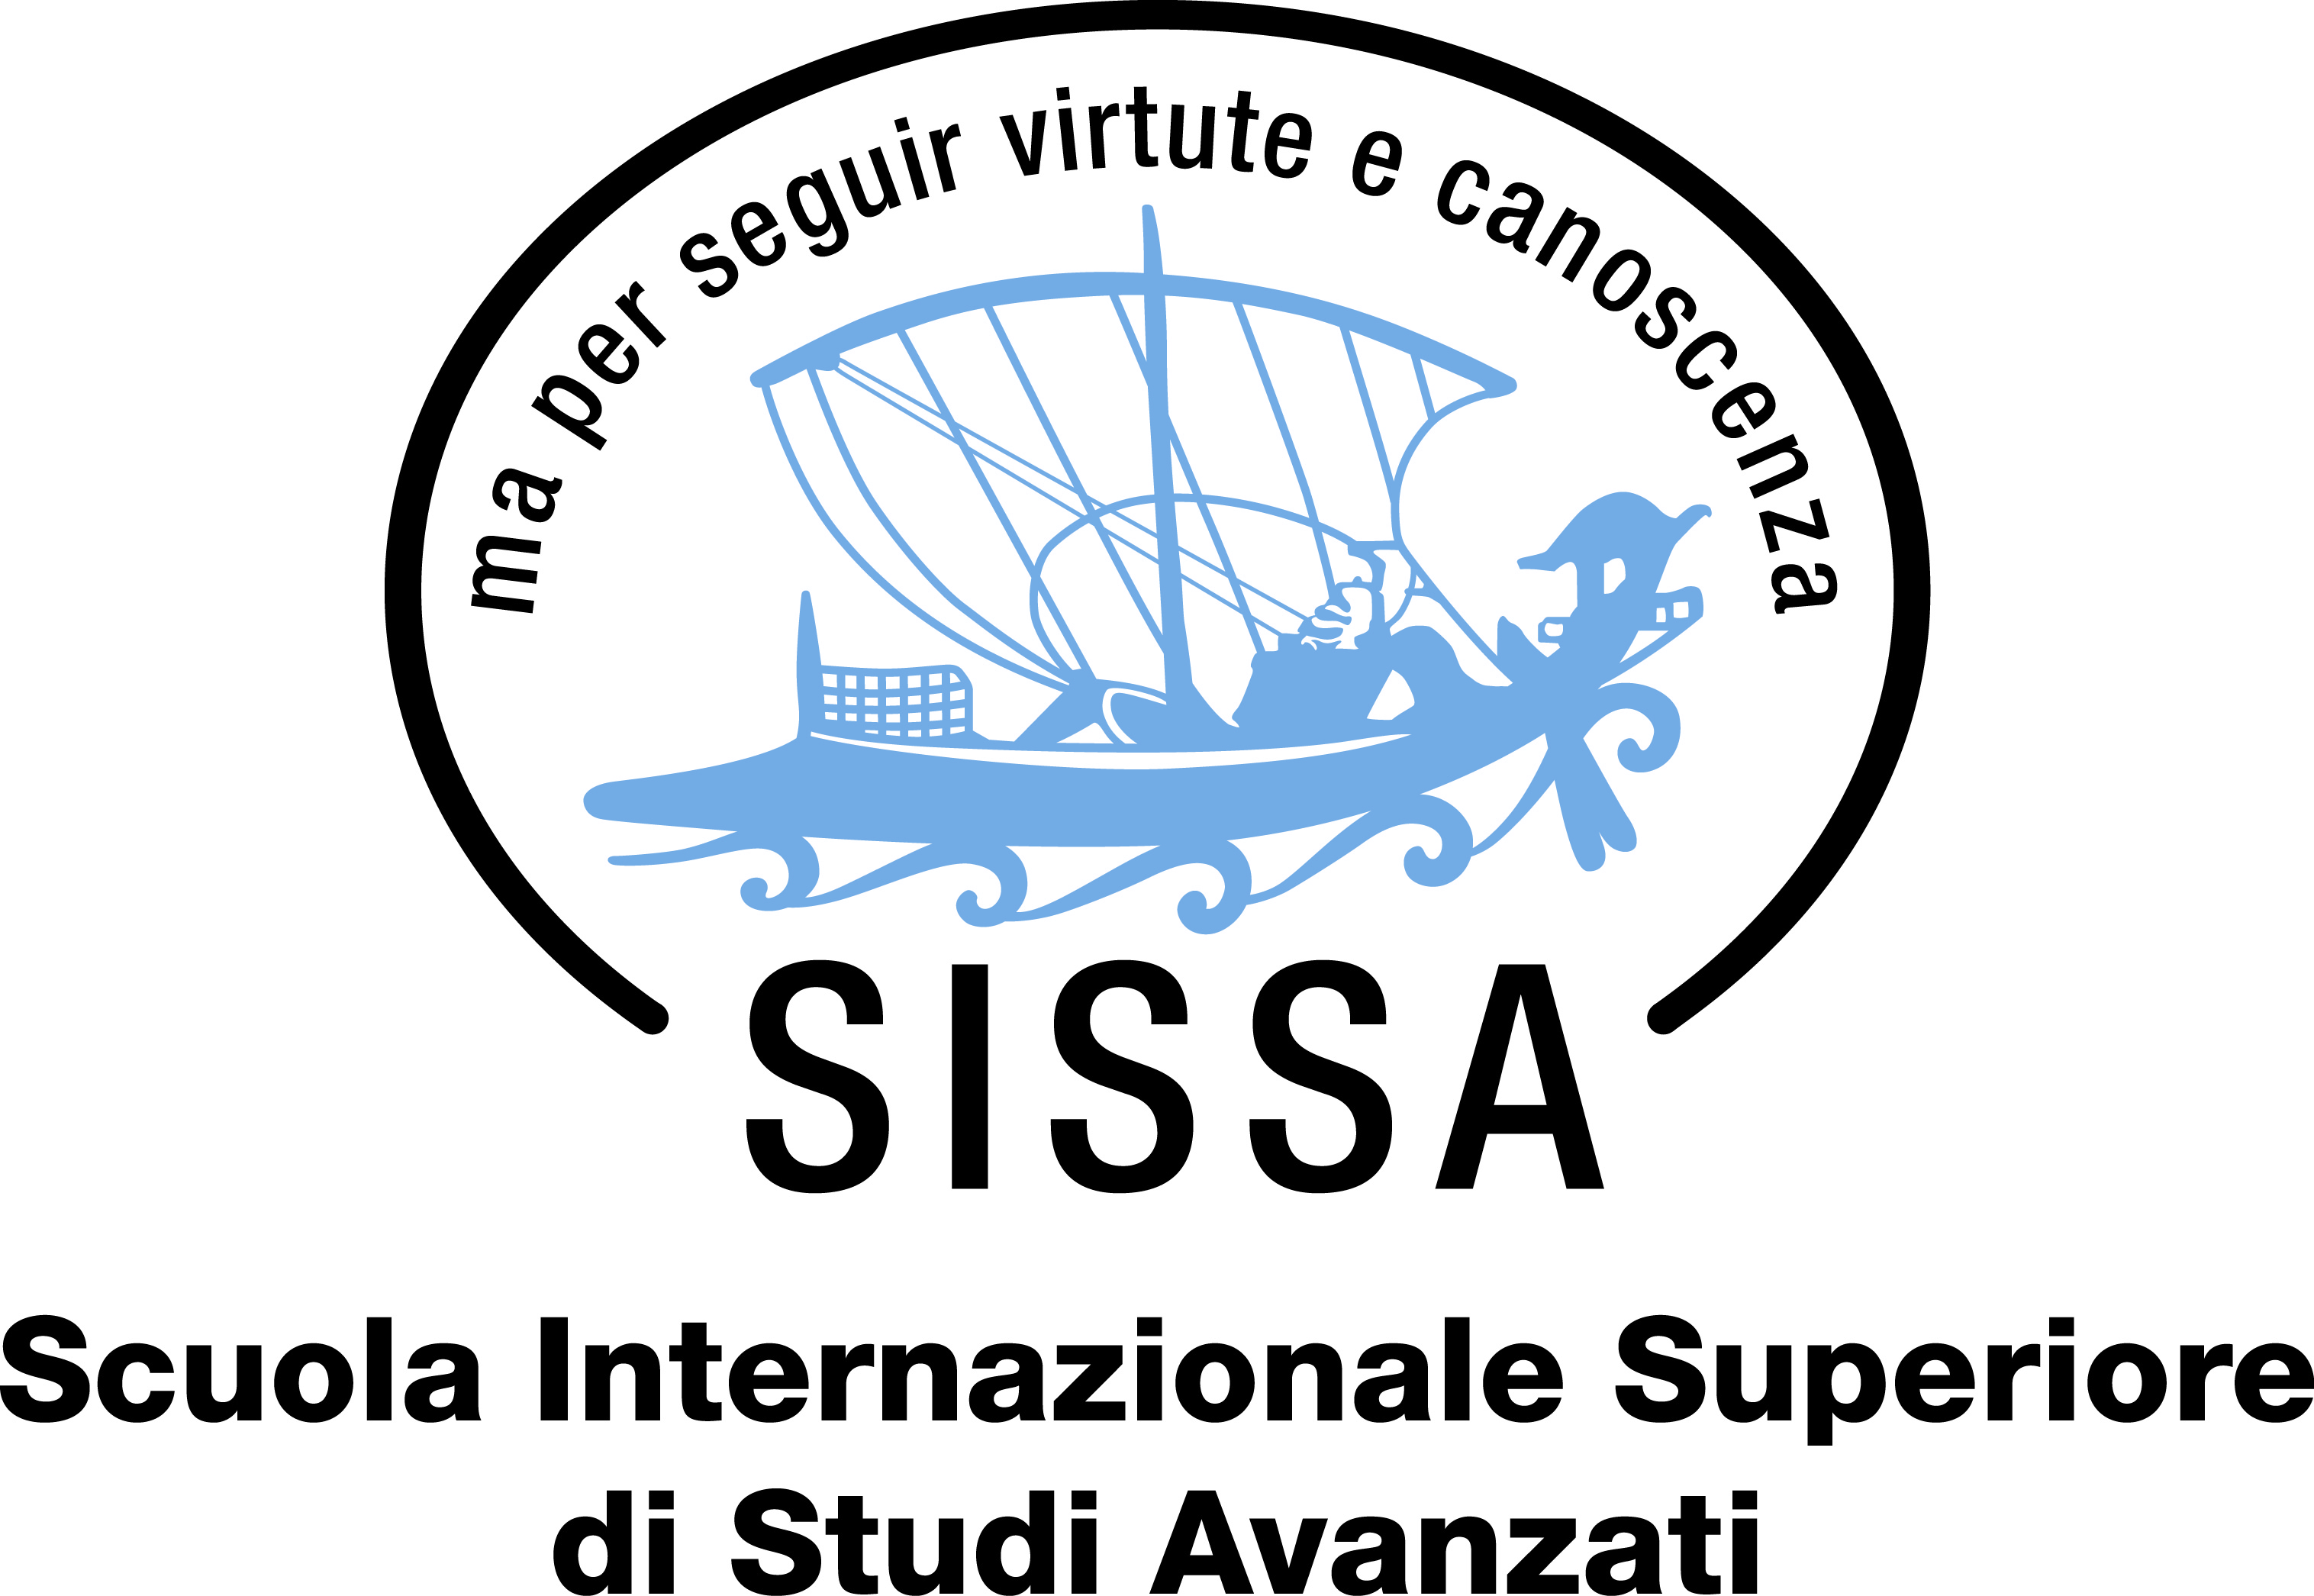 sissa-logo-acronym.jpg